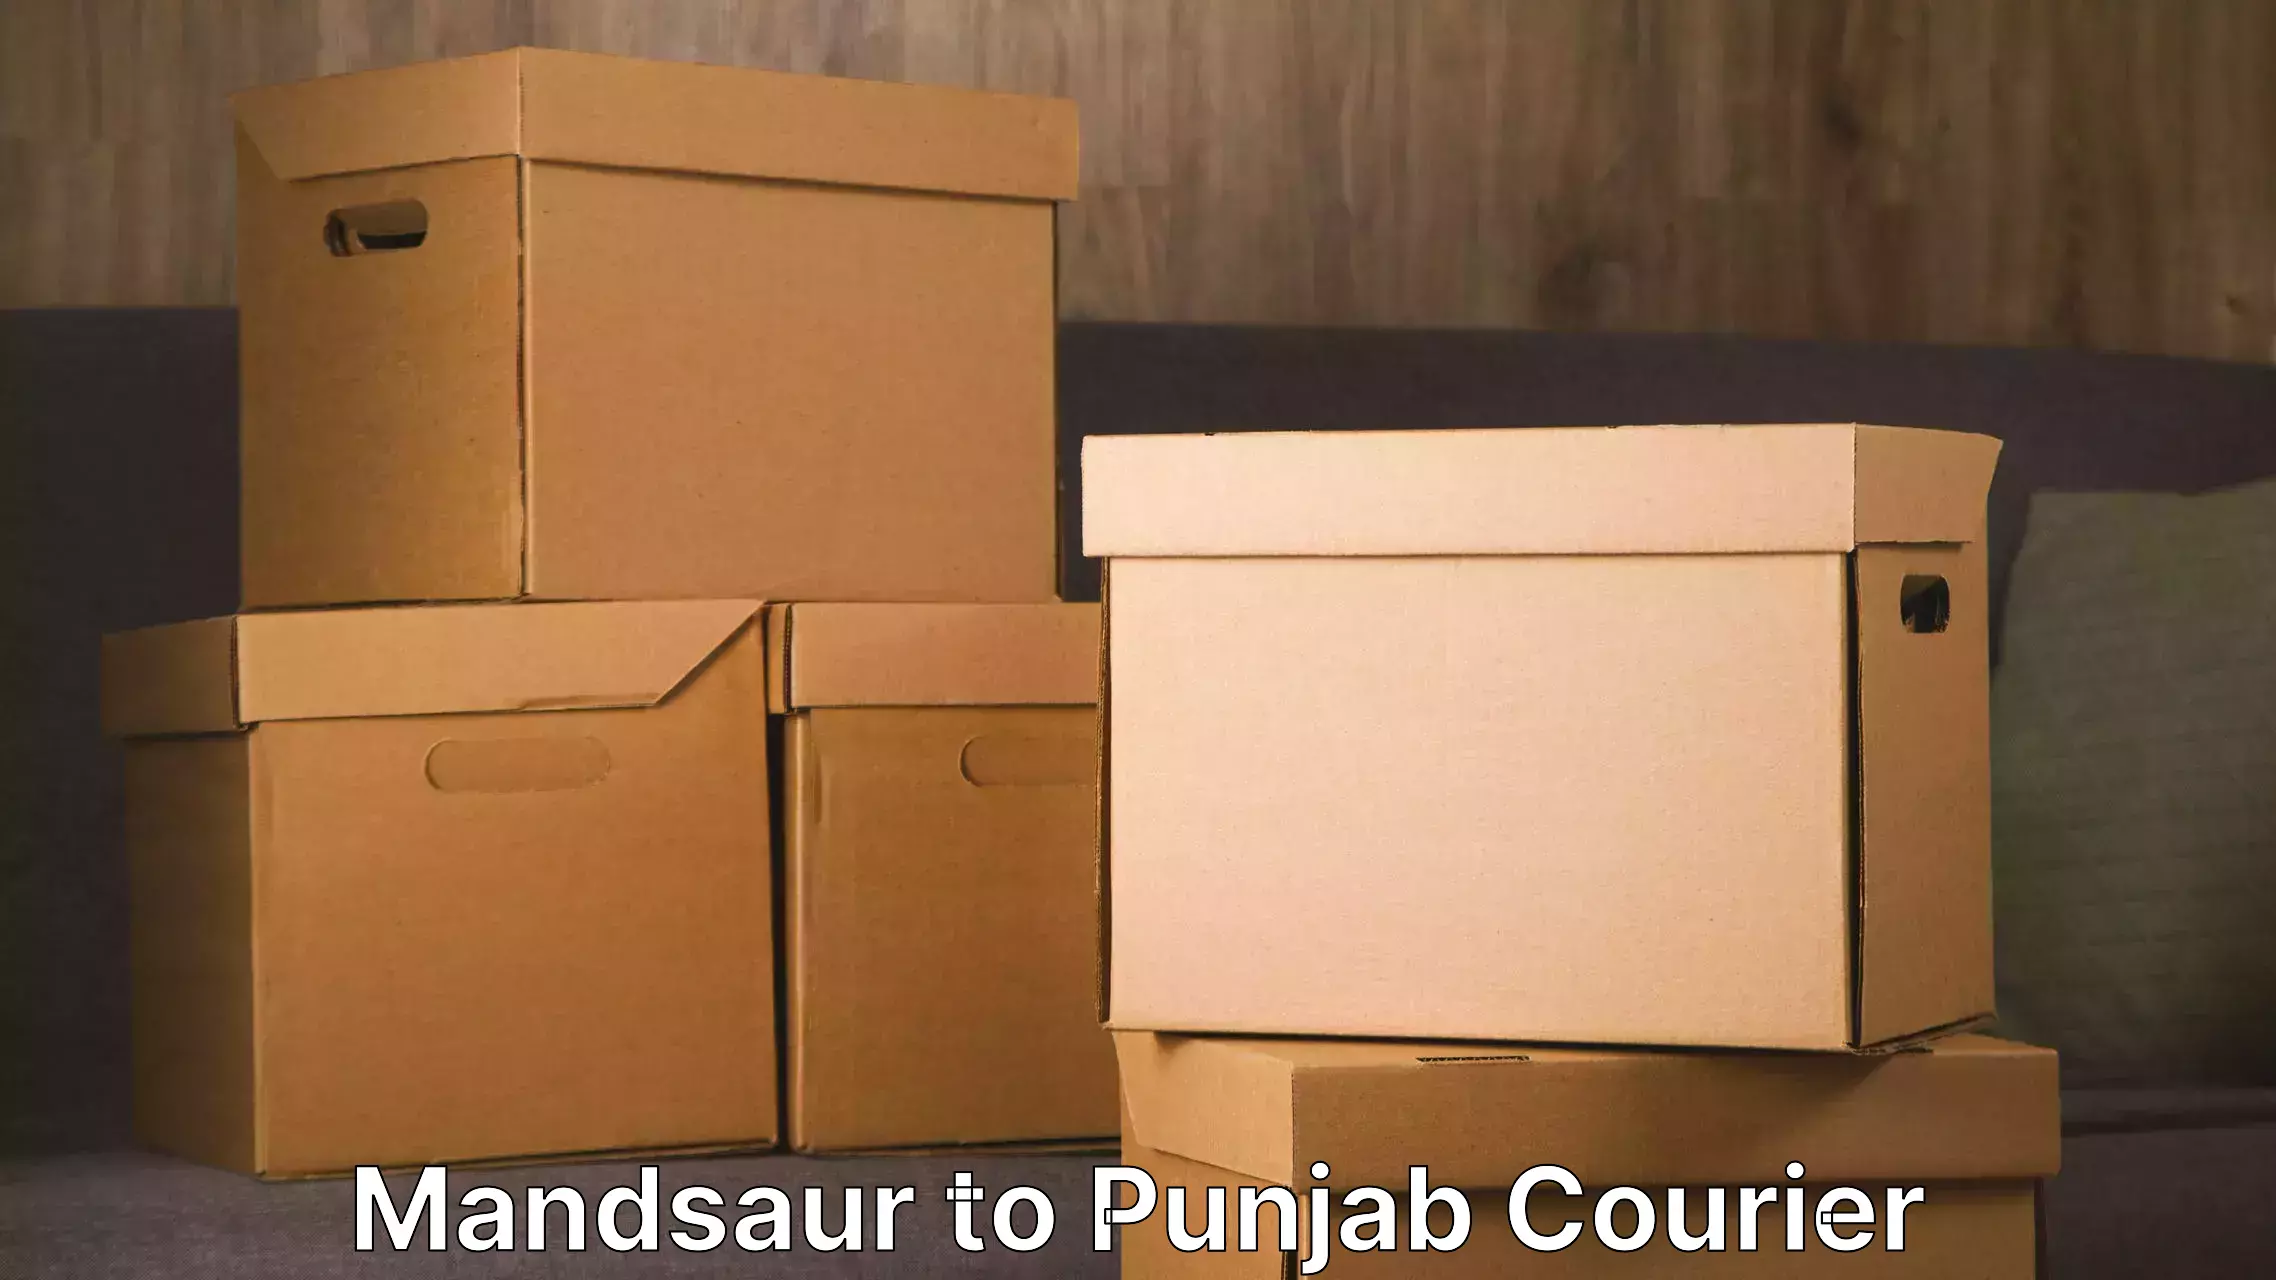 Professional moving company Mandsaur to Punjab